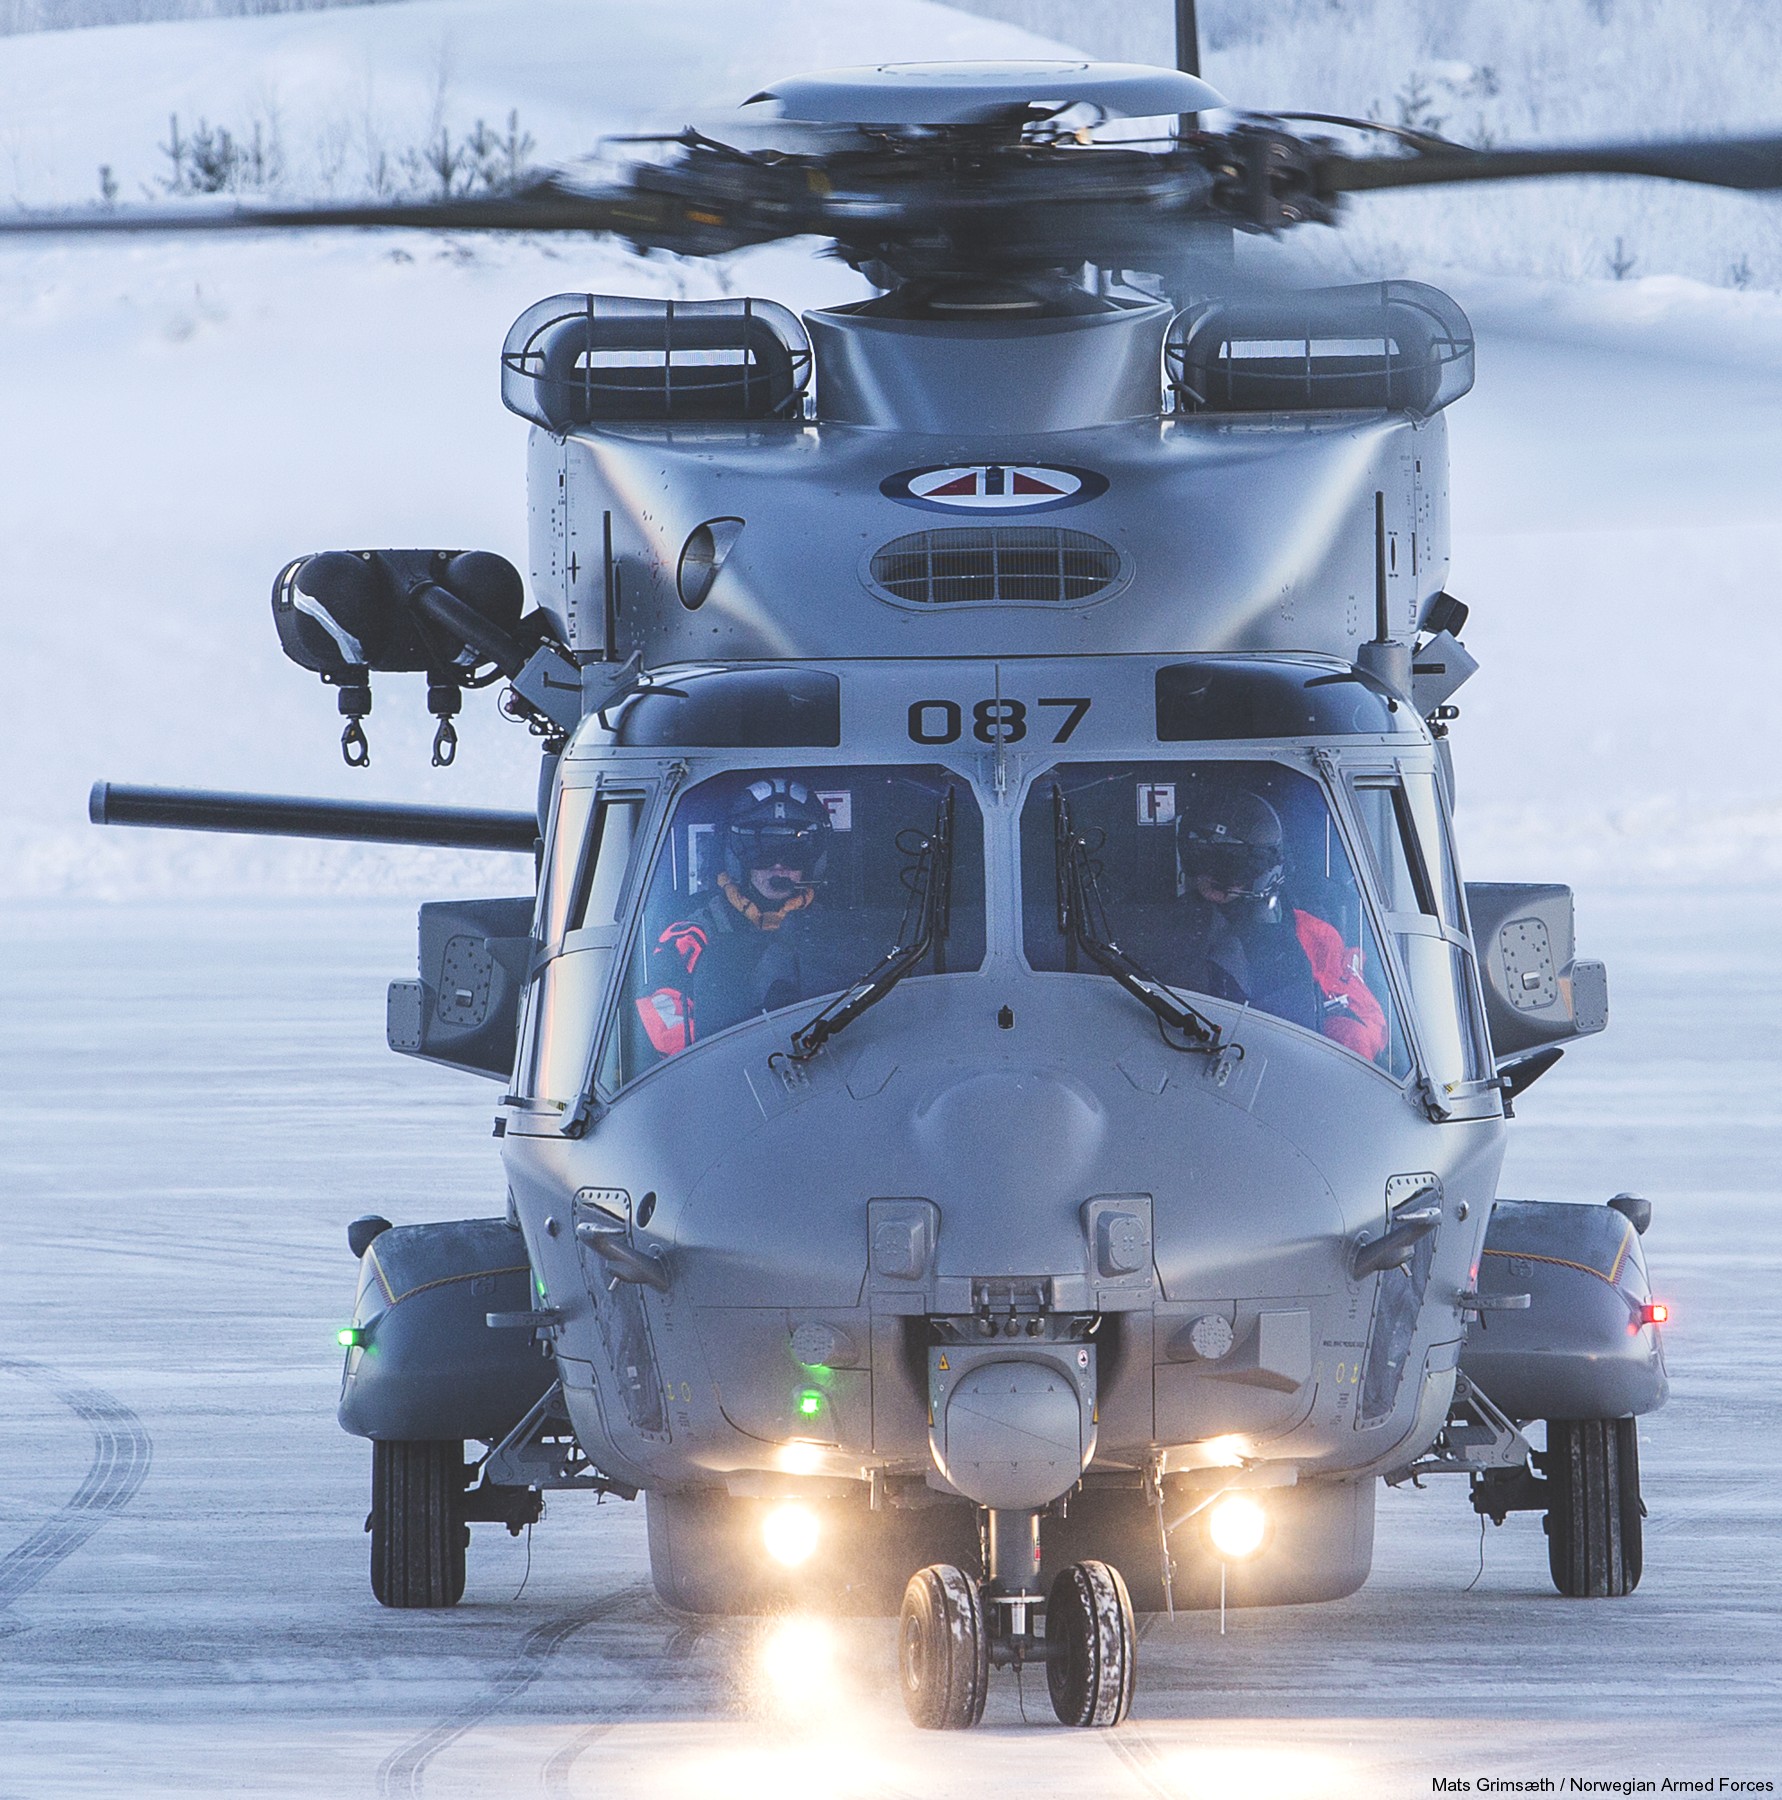 nh90 nfh asw helicopter royal norwegian coast guard navy air force kystvakt sjoforsvaret 087 03